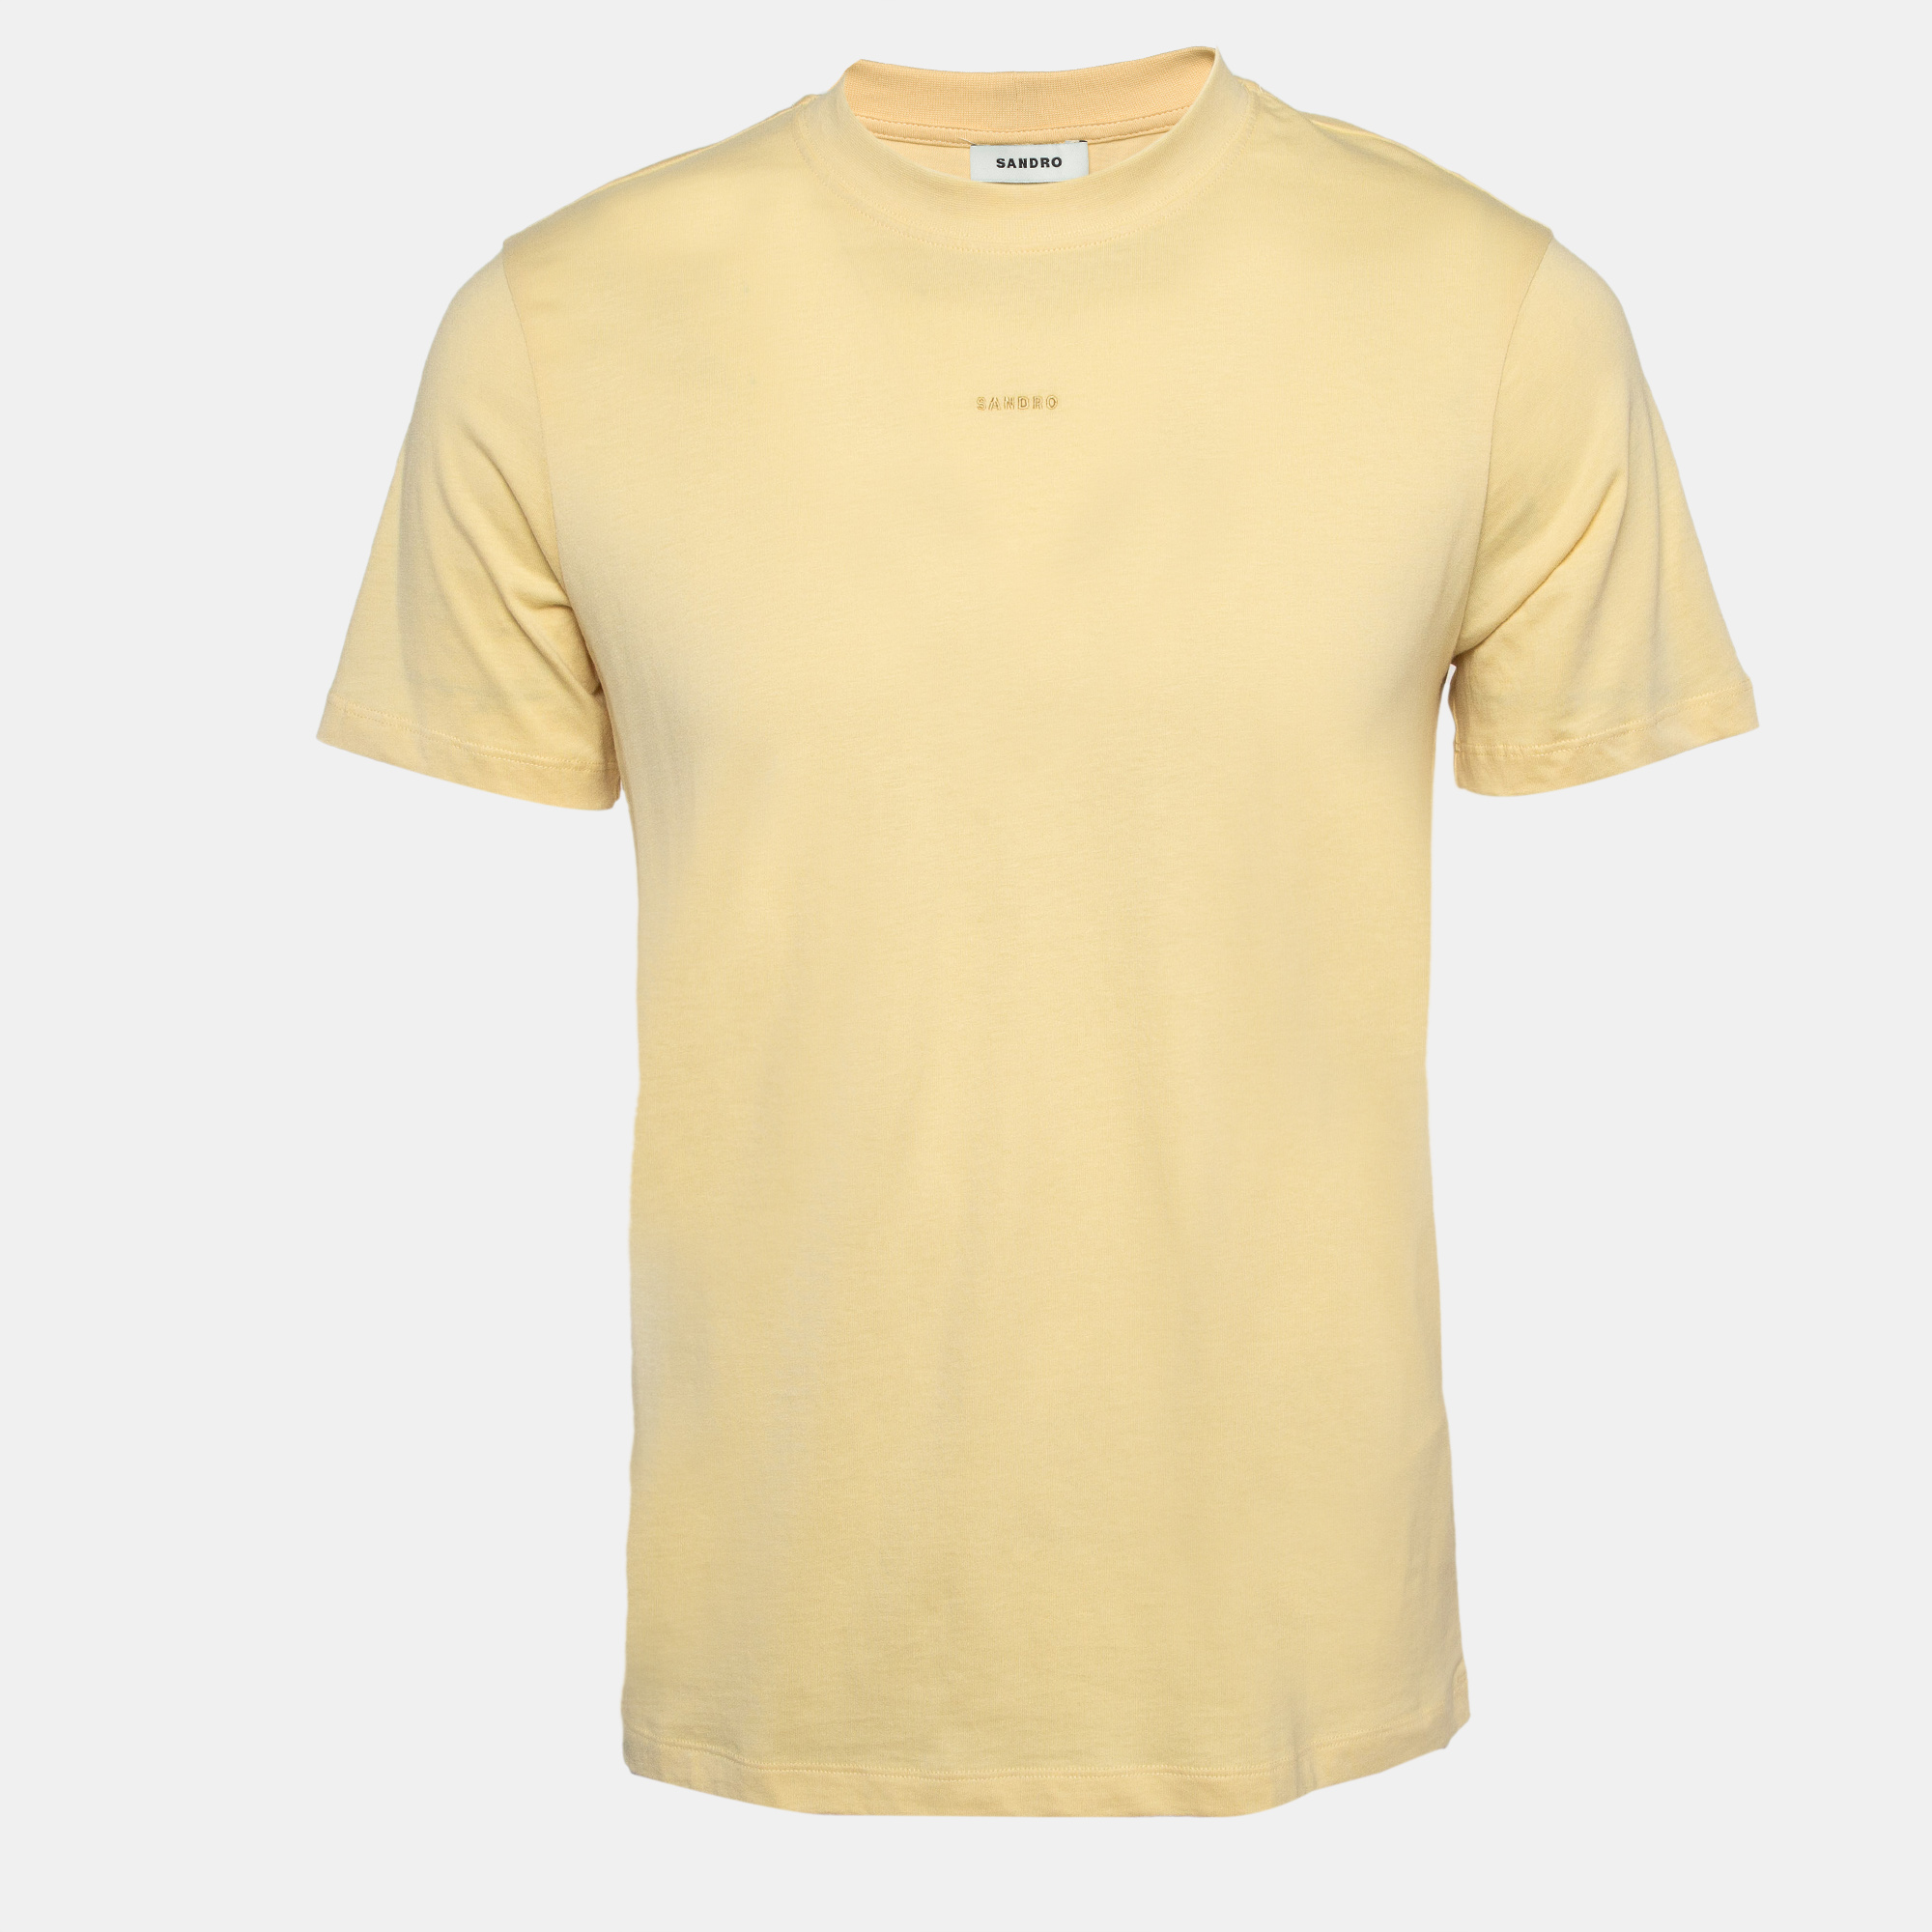 Sandro yellow logo embroidered cotton round neck t-shirt s